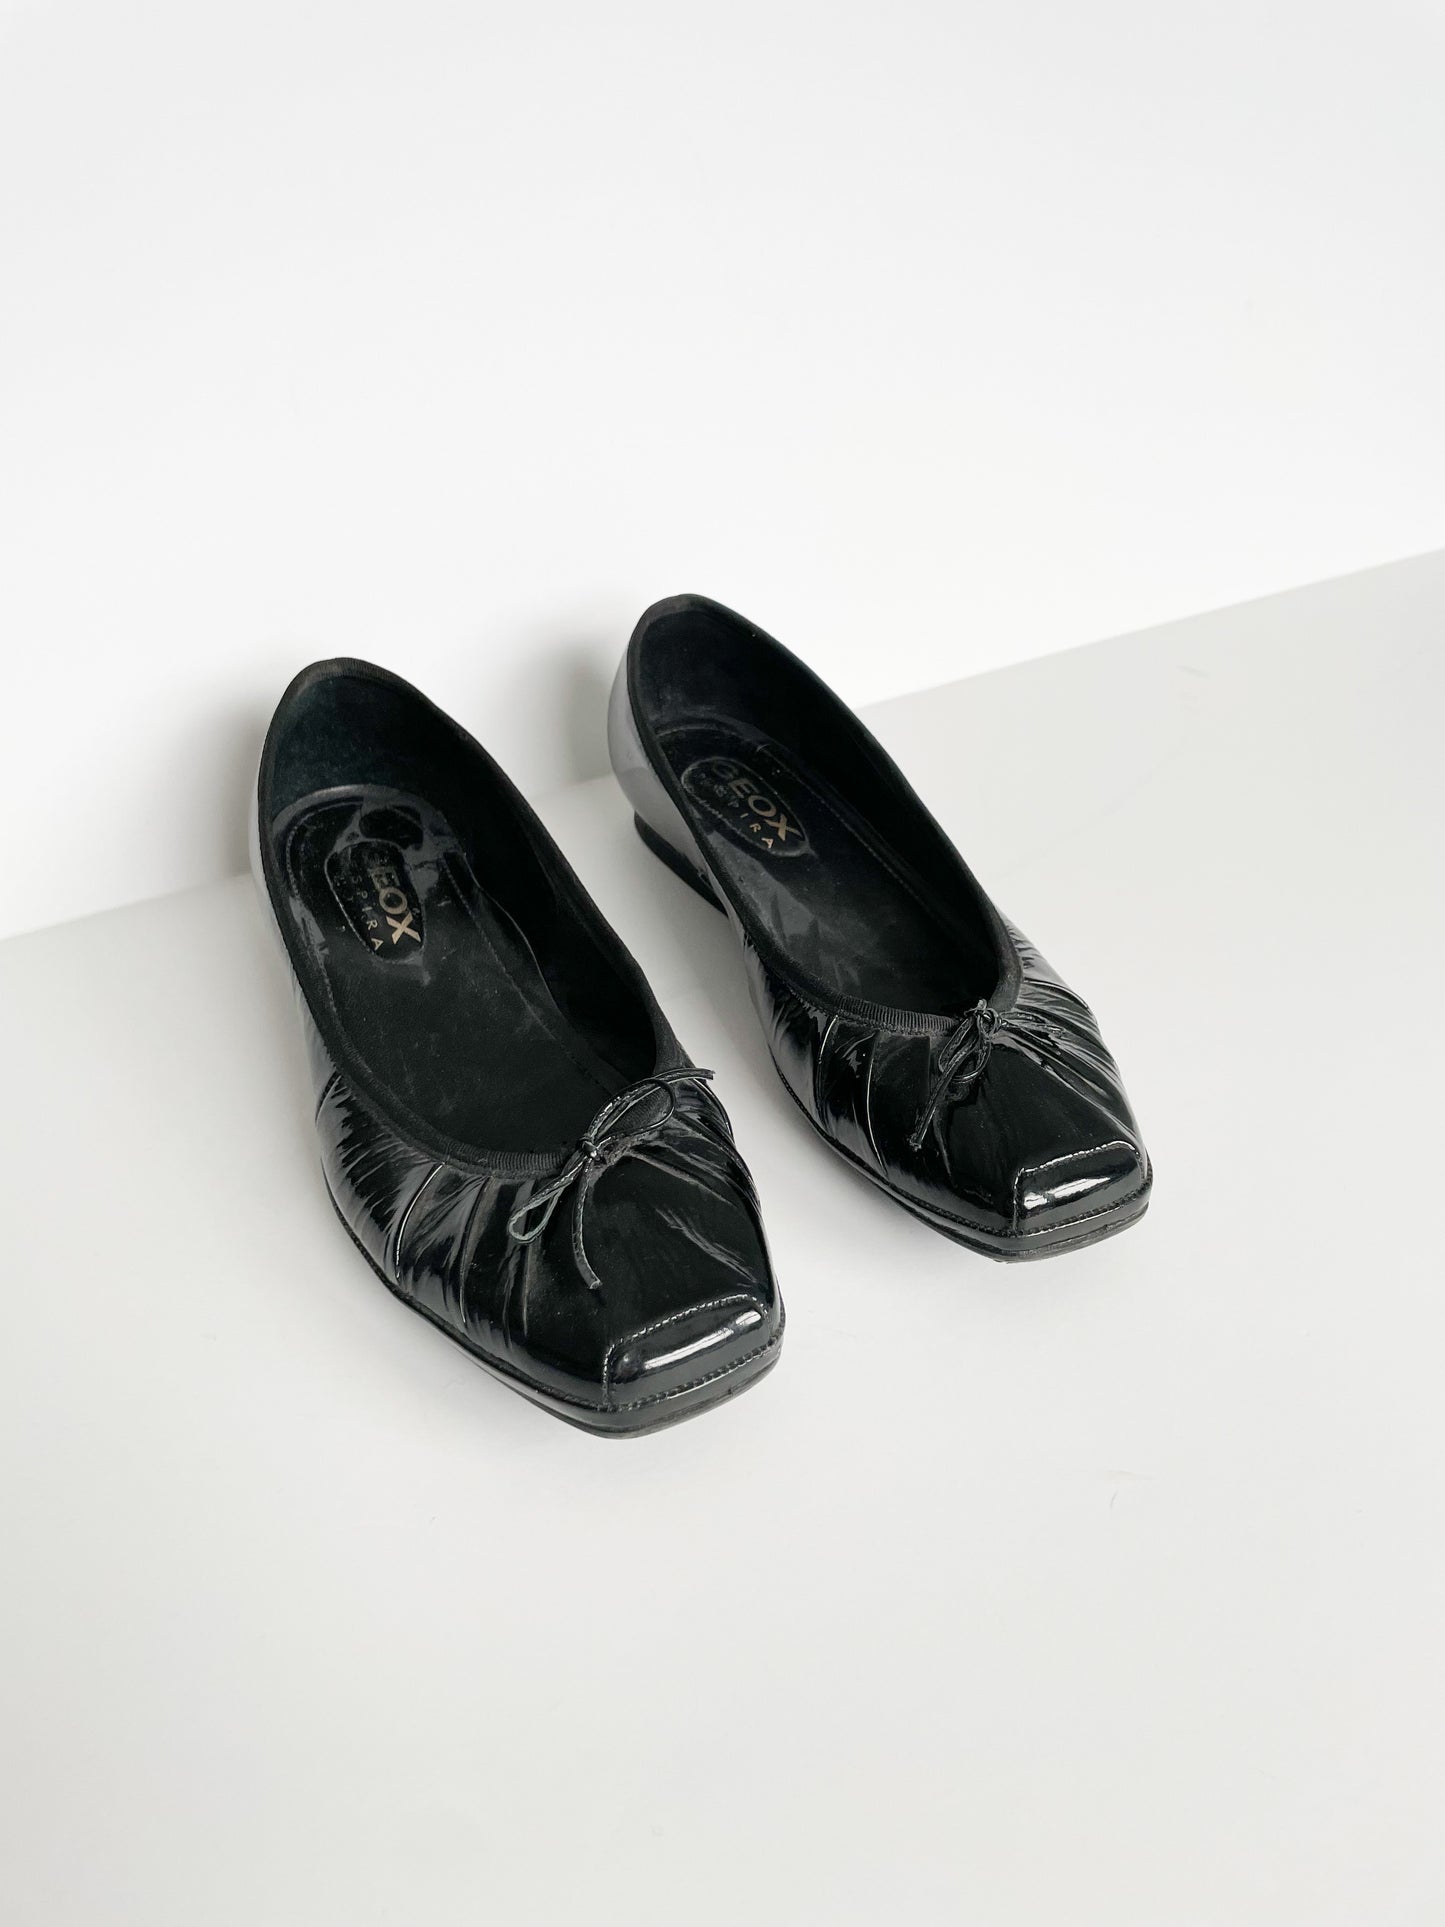 Geox Respira™ Respira Black Patent Square Toe Flats Slip On Shoes - Size 8